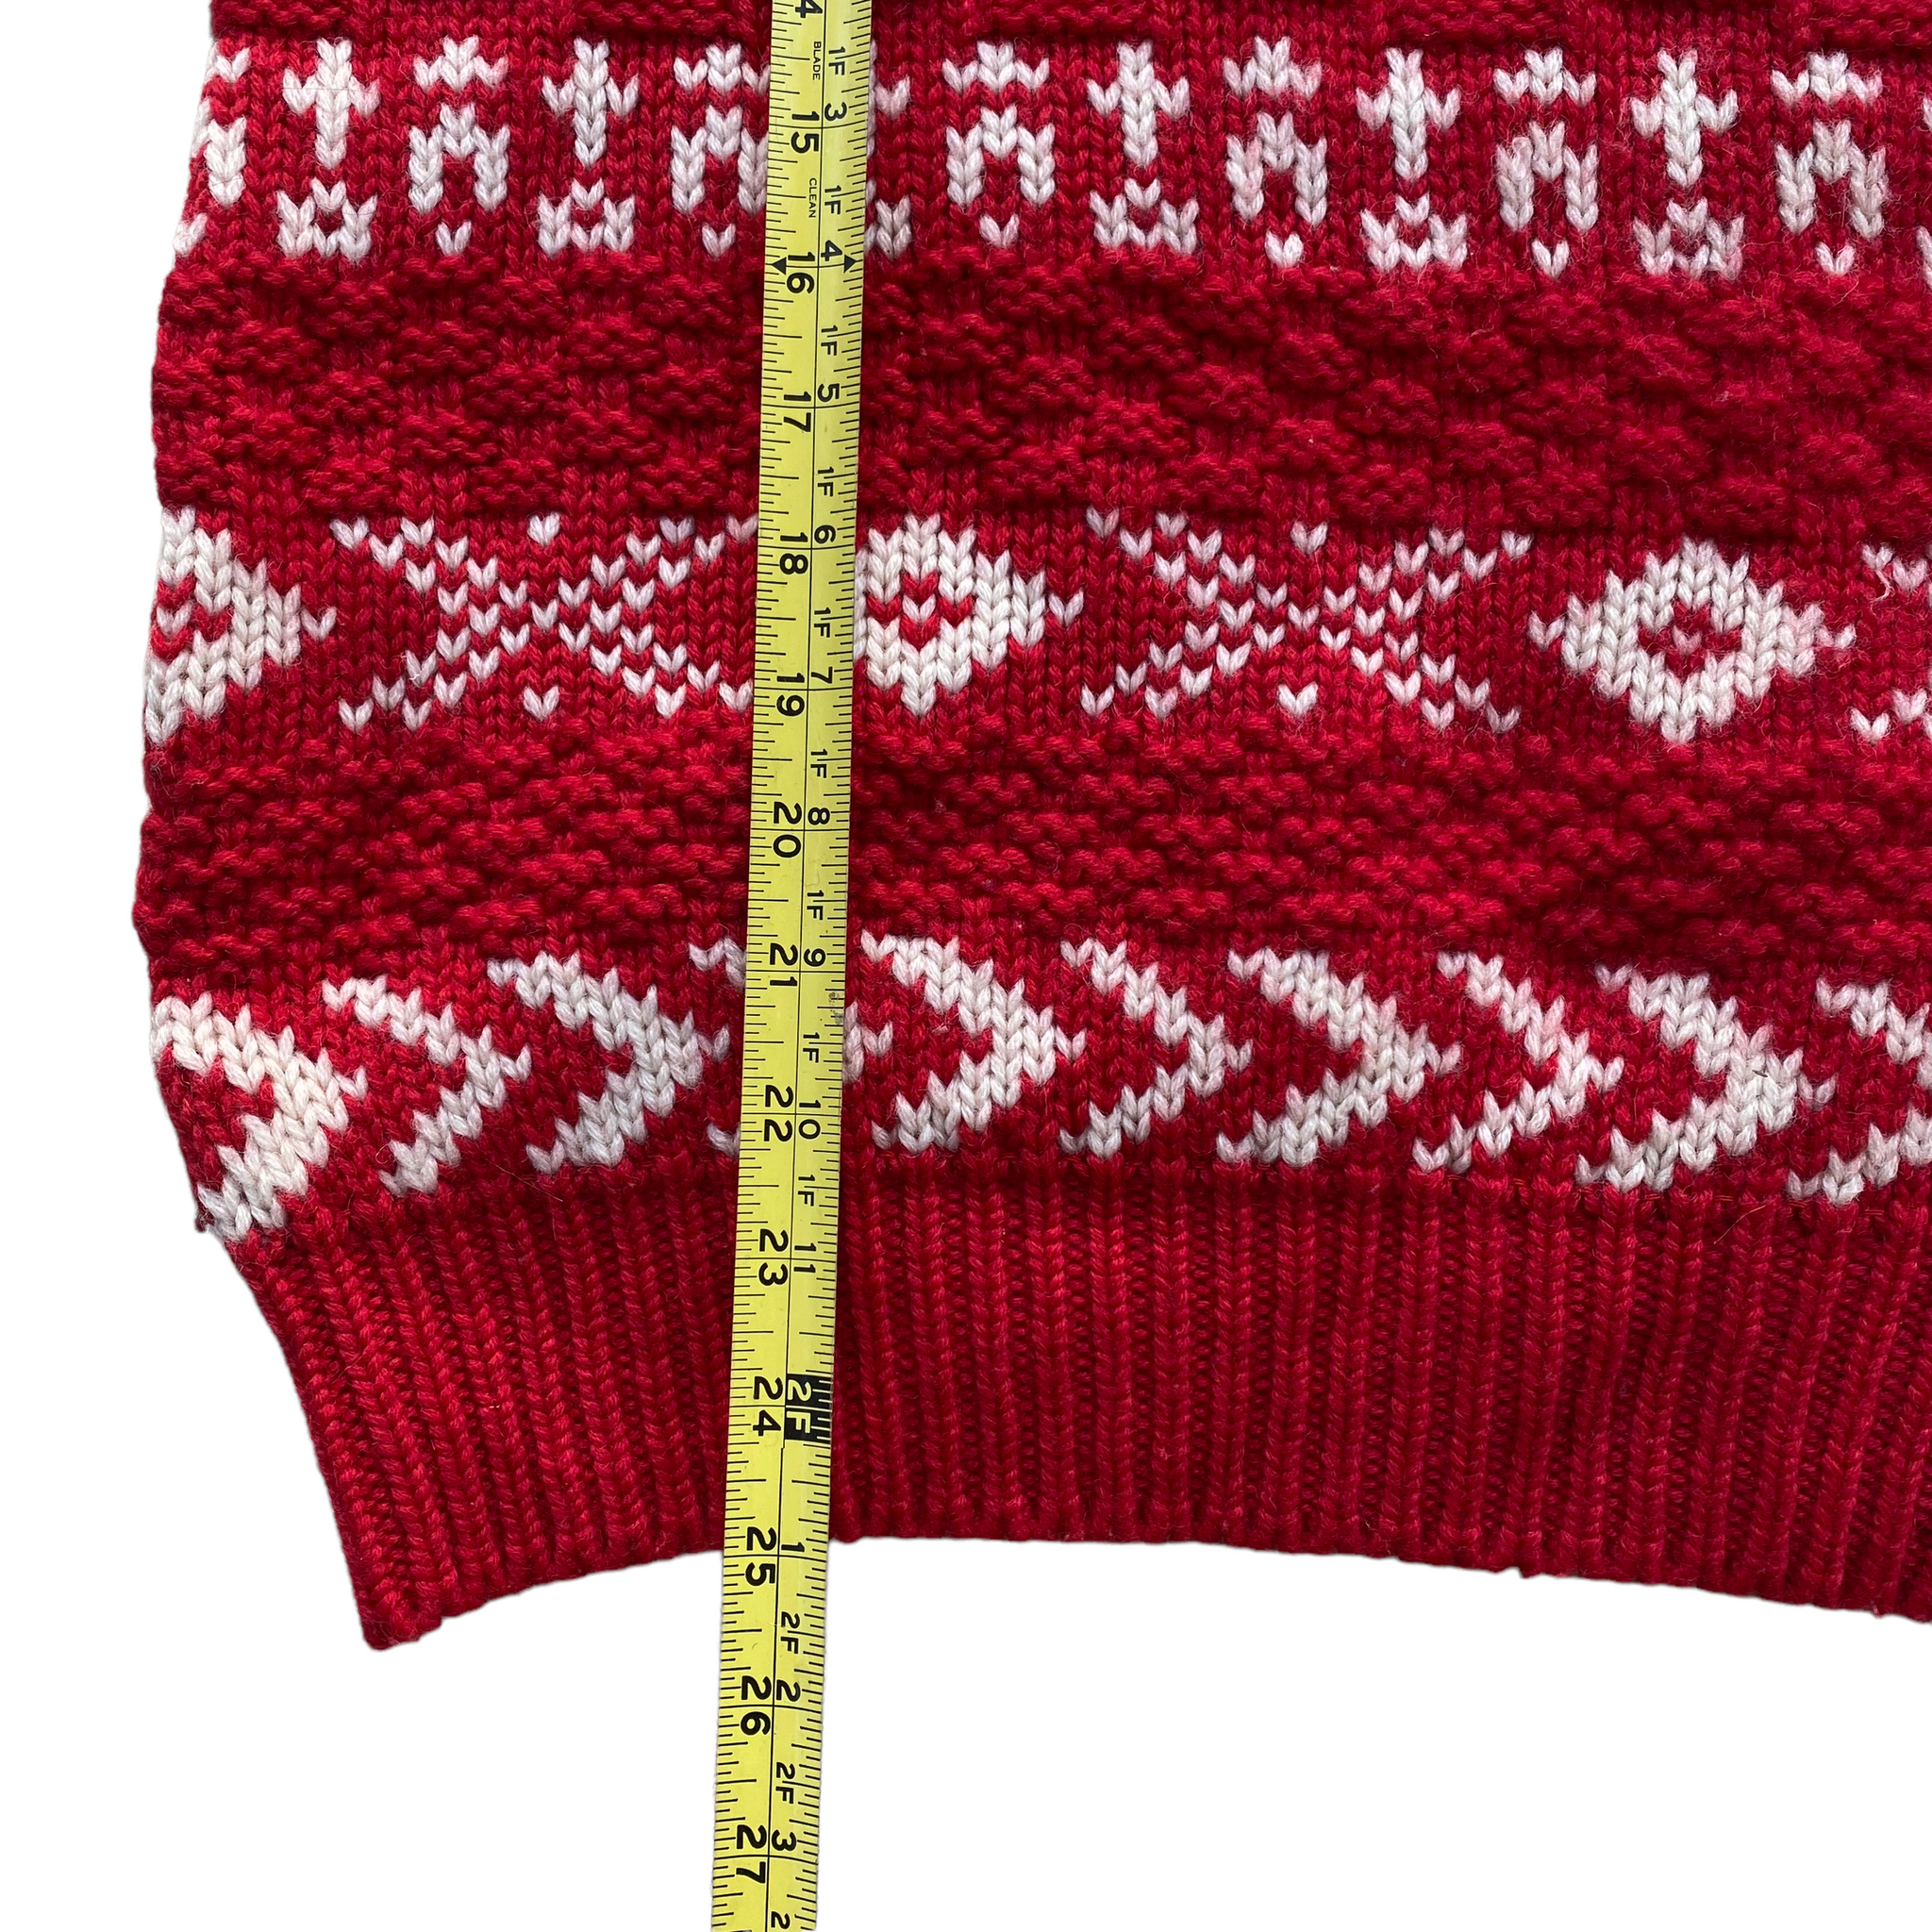 90s Gap pure wool sweater XL